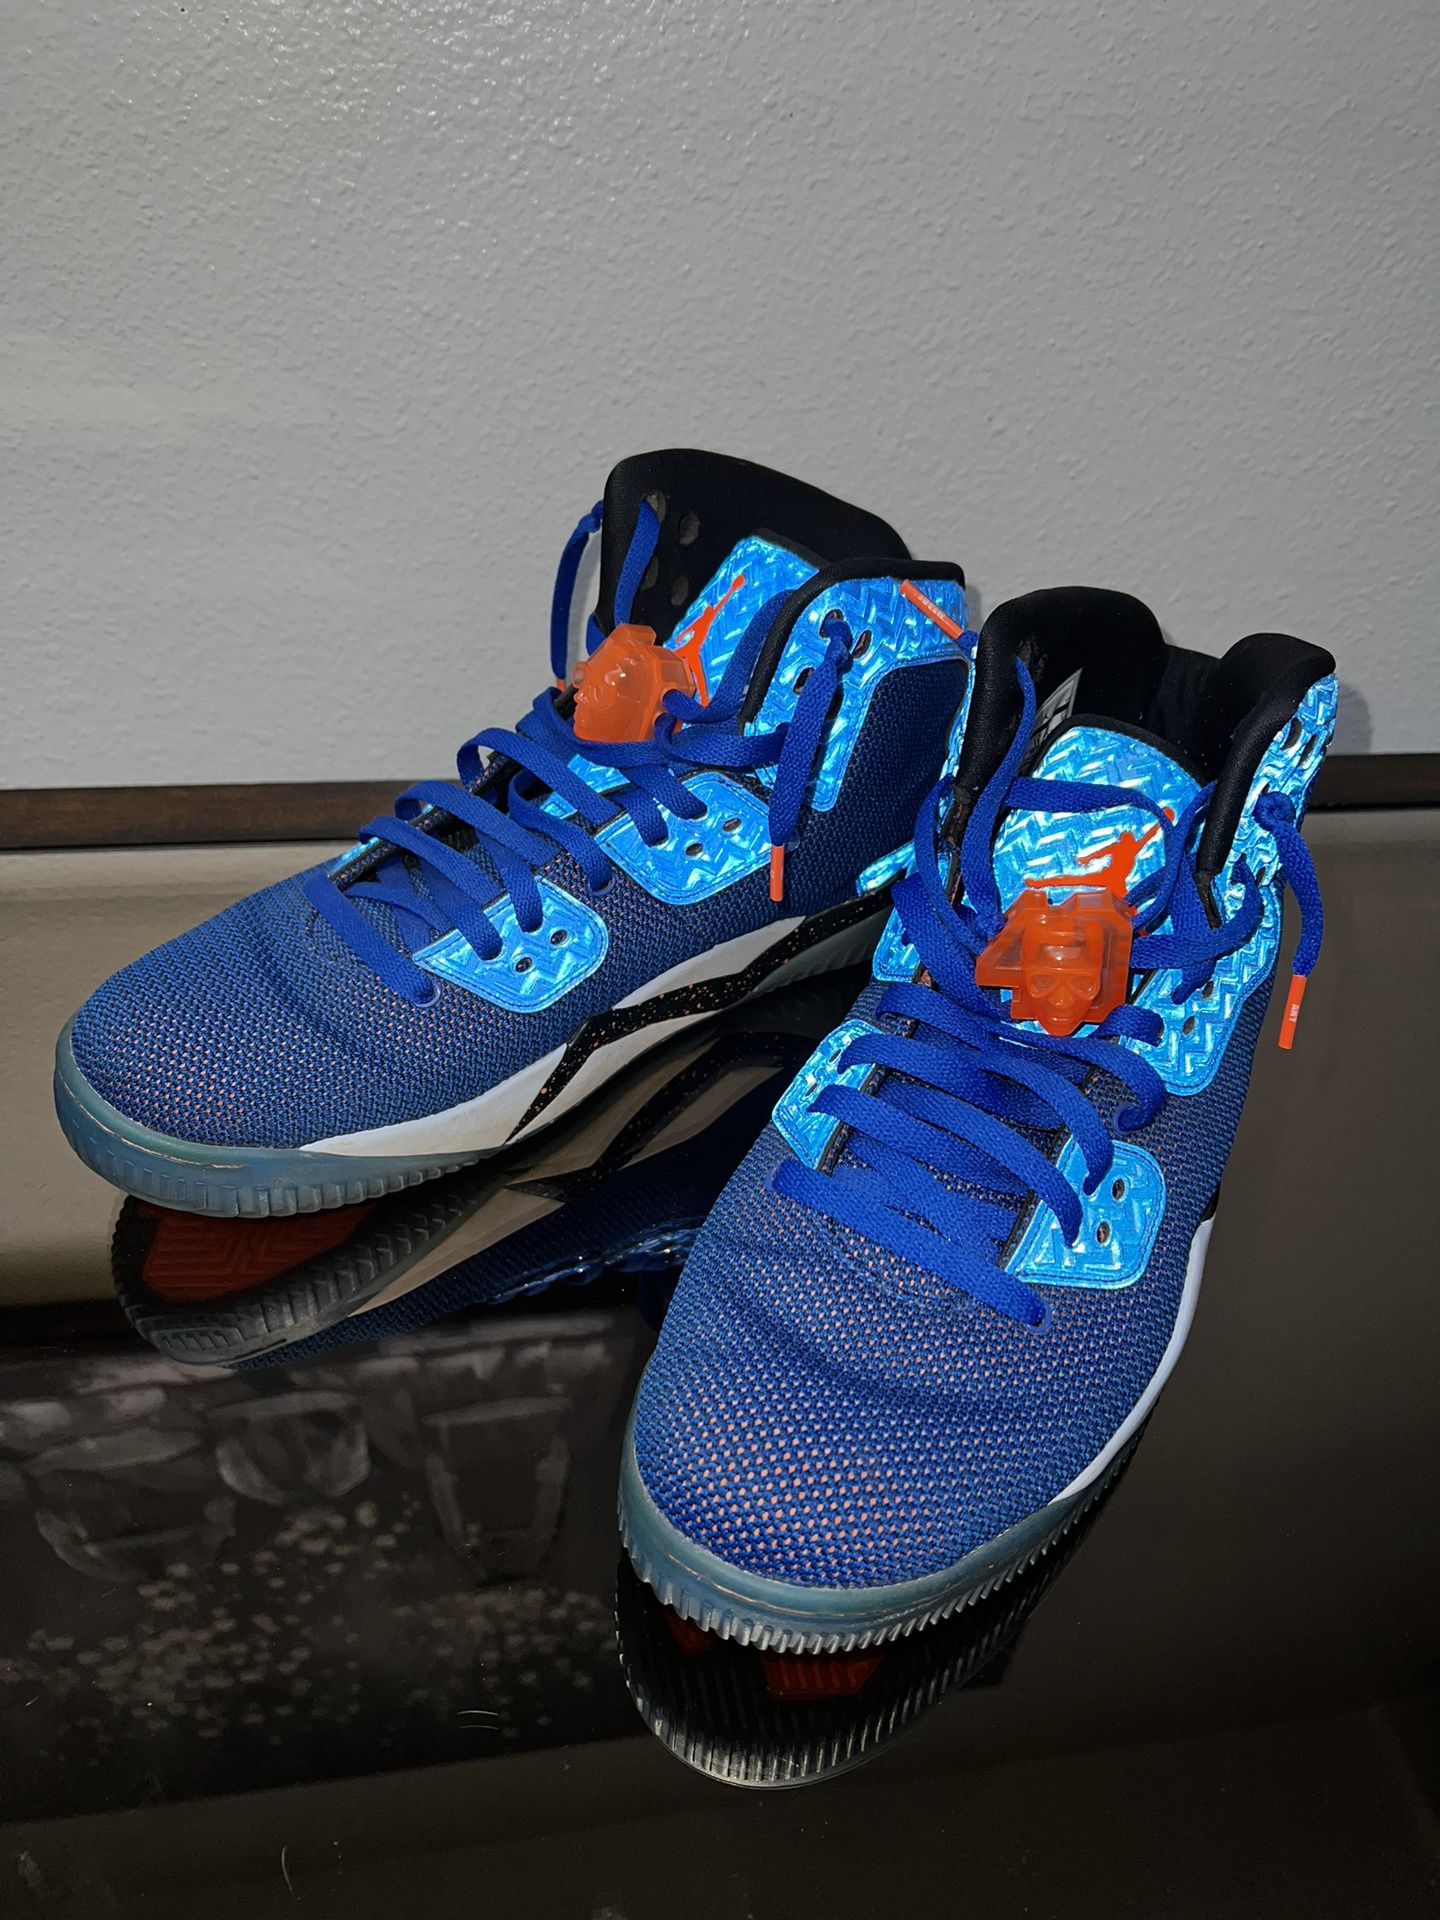 Like New Air Jordan Shoes Sneakers Size 12 